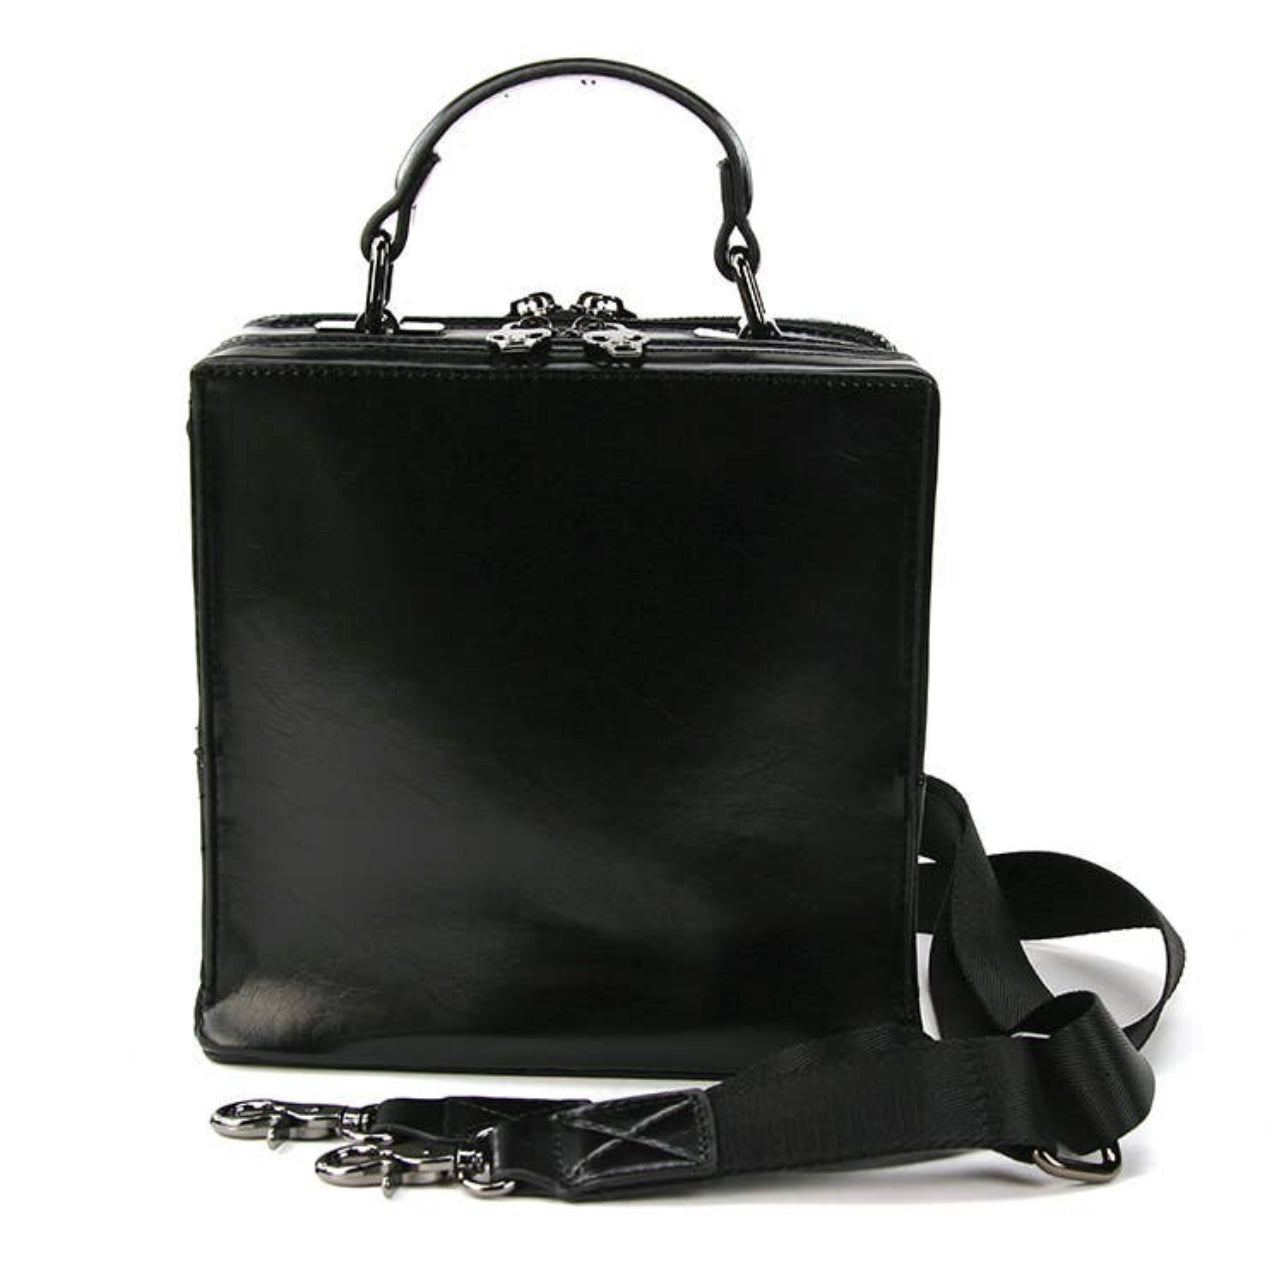 Black 3-D Skeleton Square Handbag